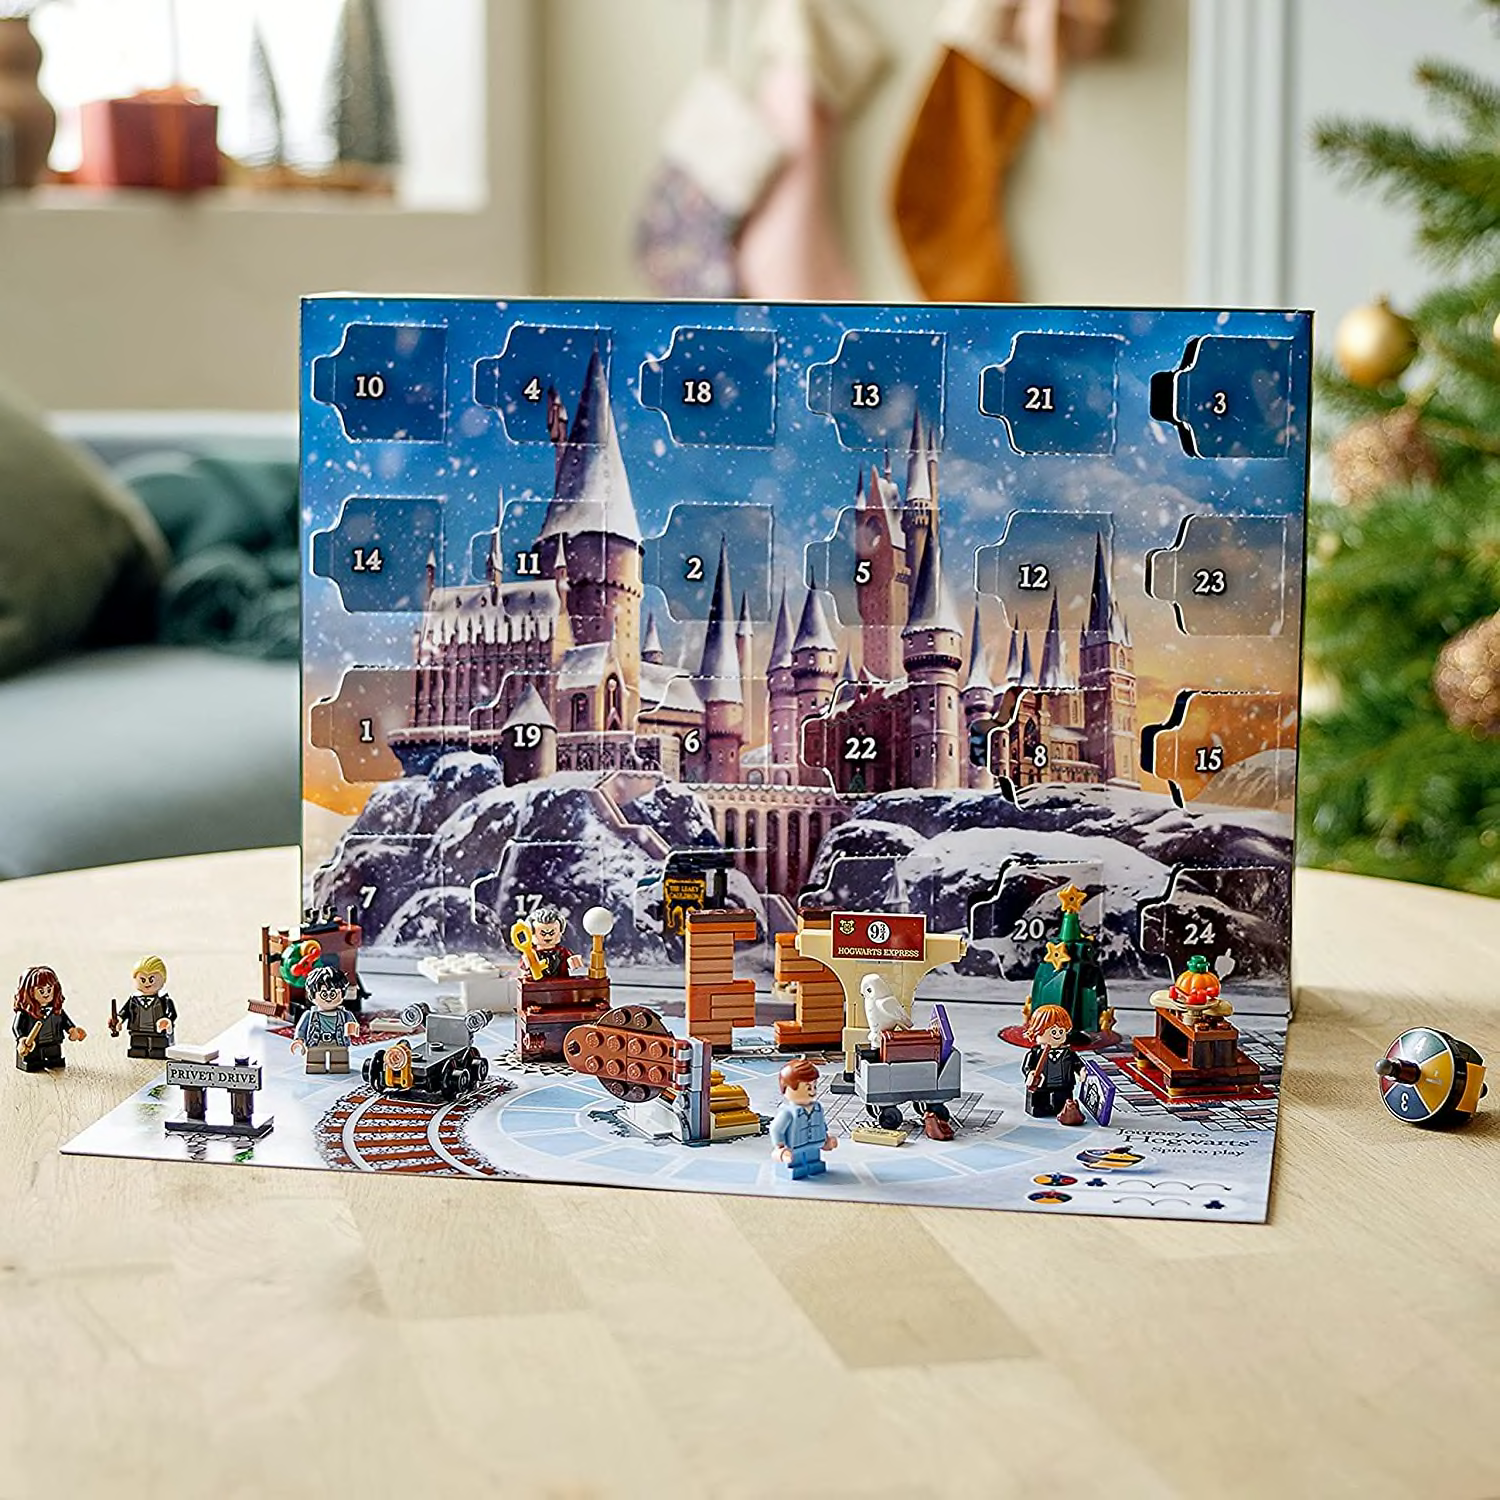 Enjoy LEGO s Marvel Star Wars and Harry Potter Advent calendars